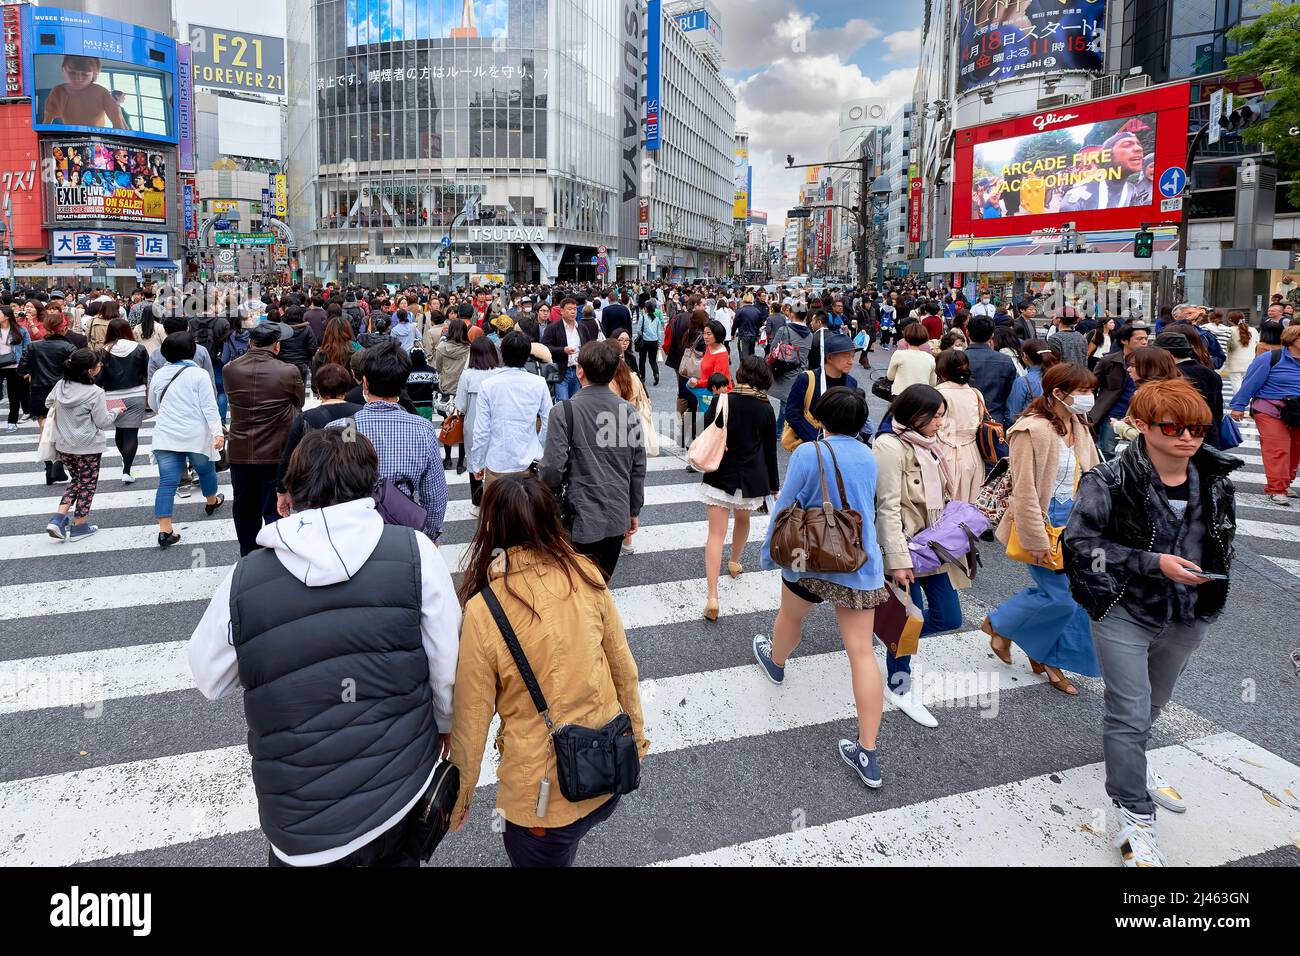 Japan. Tokyo. Shibuya Crossing at rush hour Stock Photo